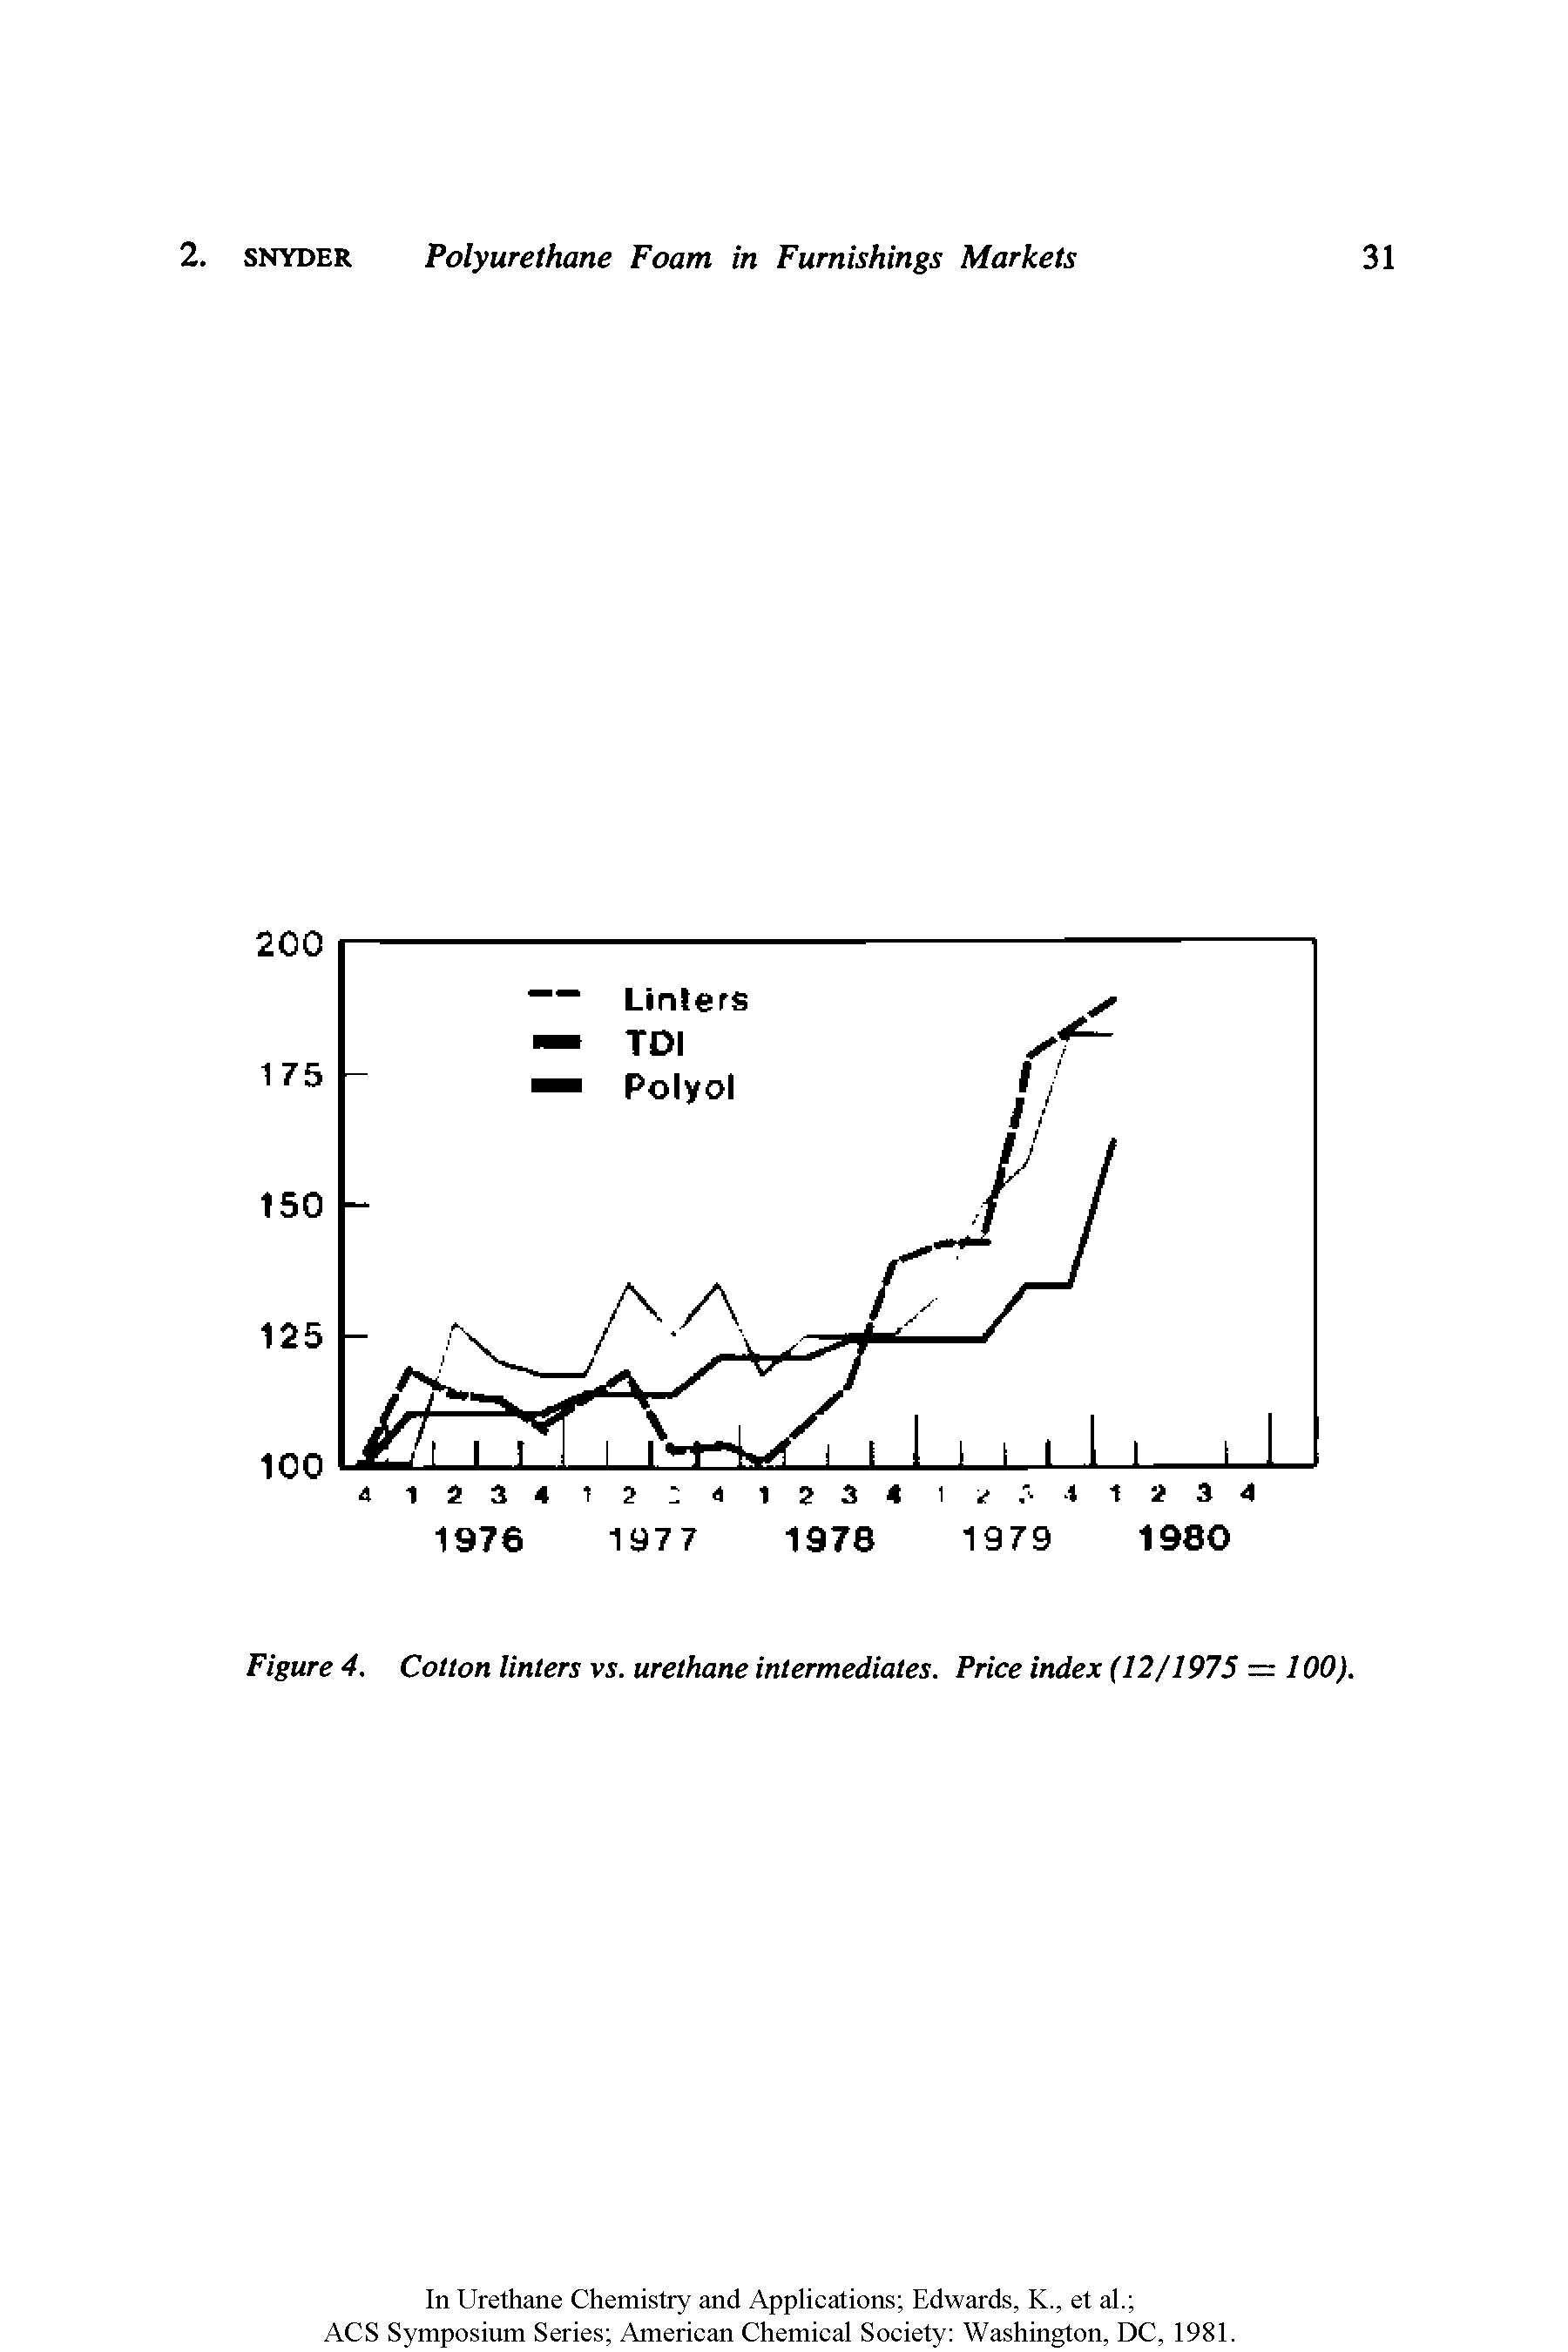 Figure 4. Cotton linters vs. urethane intermediates. Price index (12/1975 = 100).